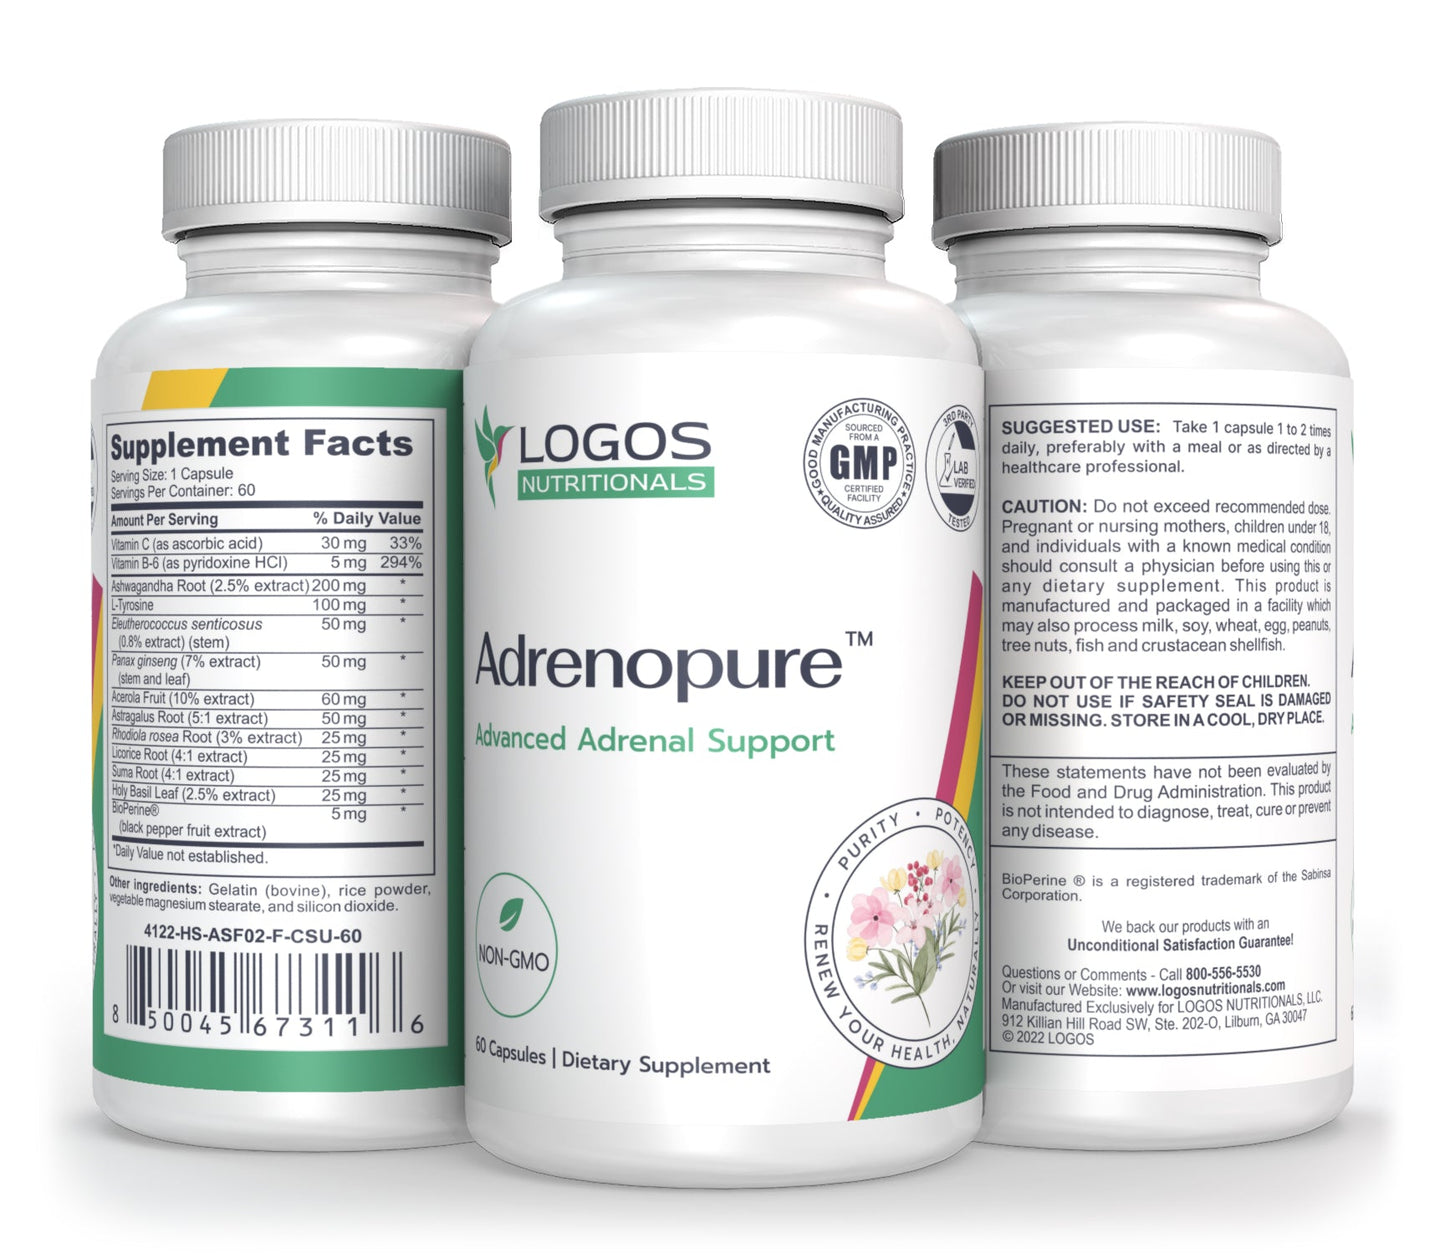 Logos Nutritionals_Adrenopure